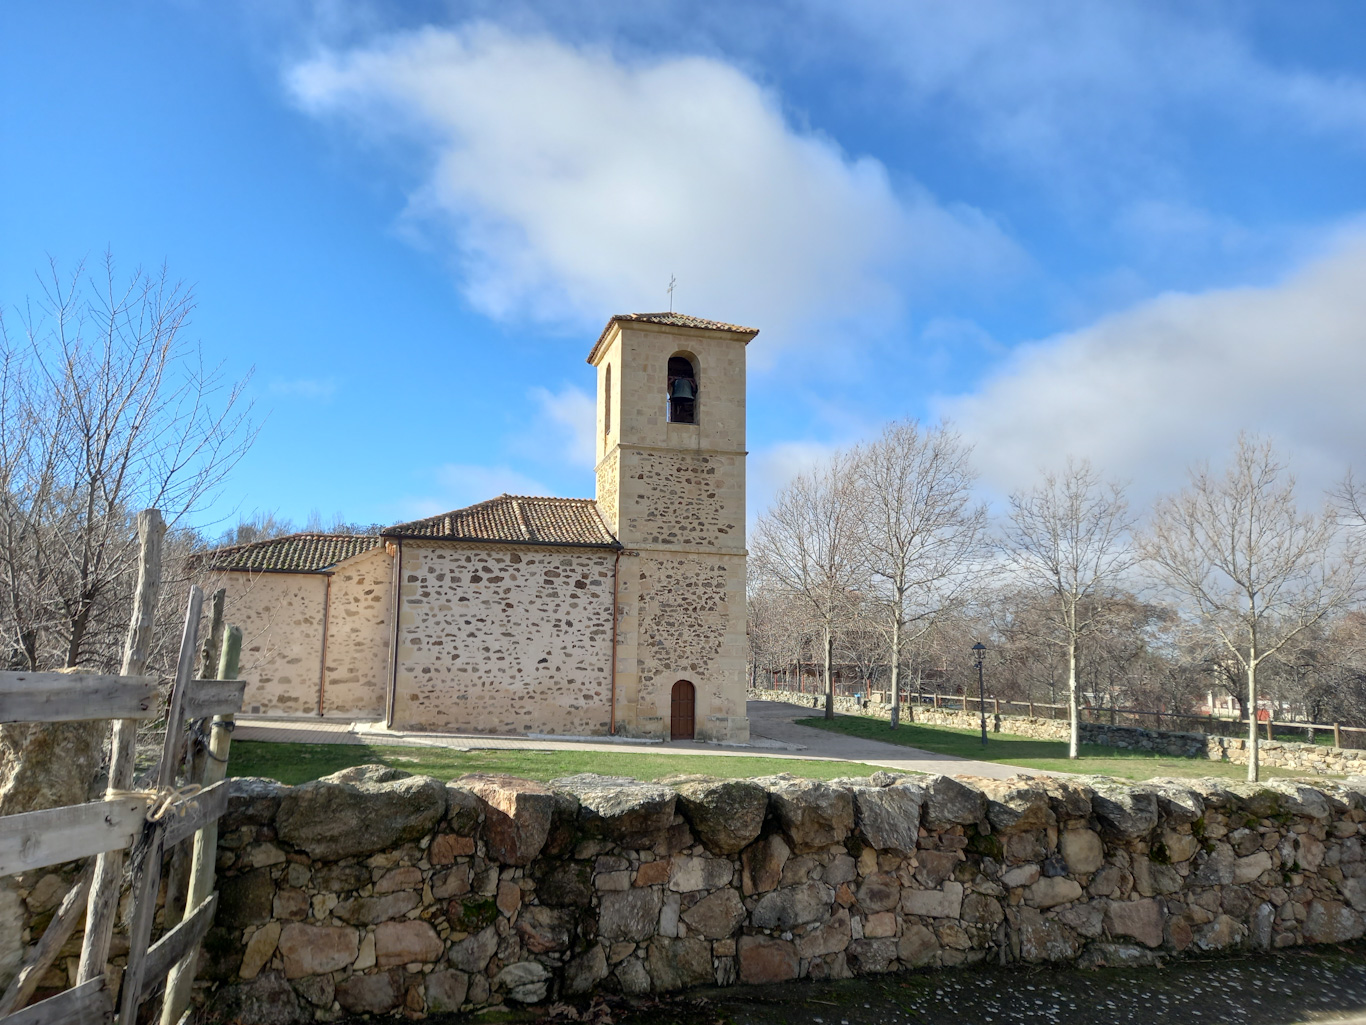  Iglesia Parroquial San Nicolas de Bari edited